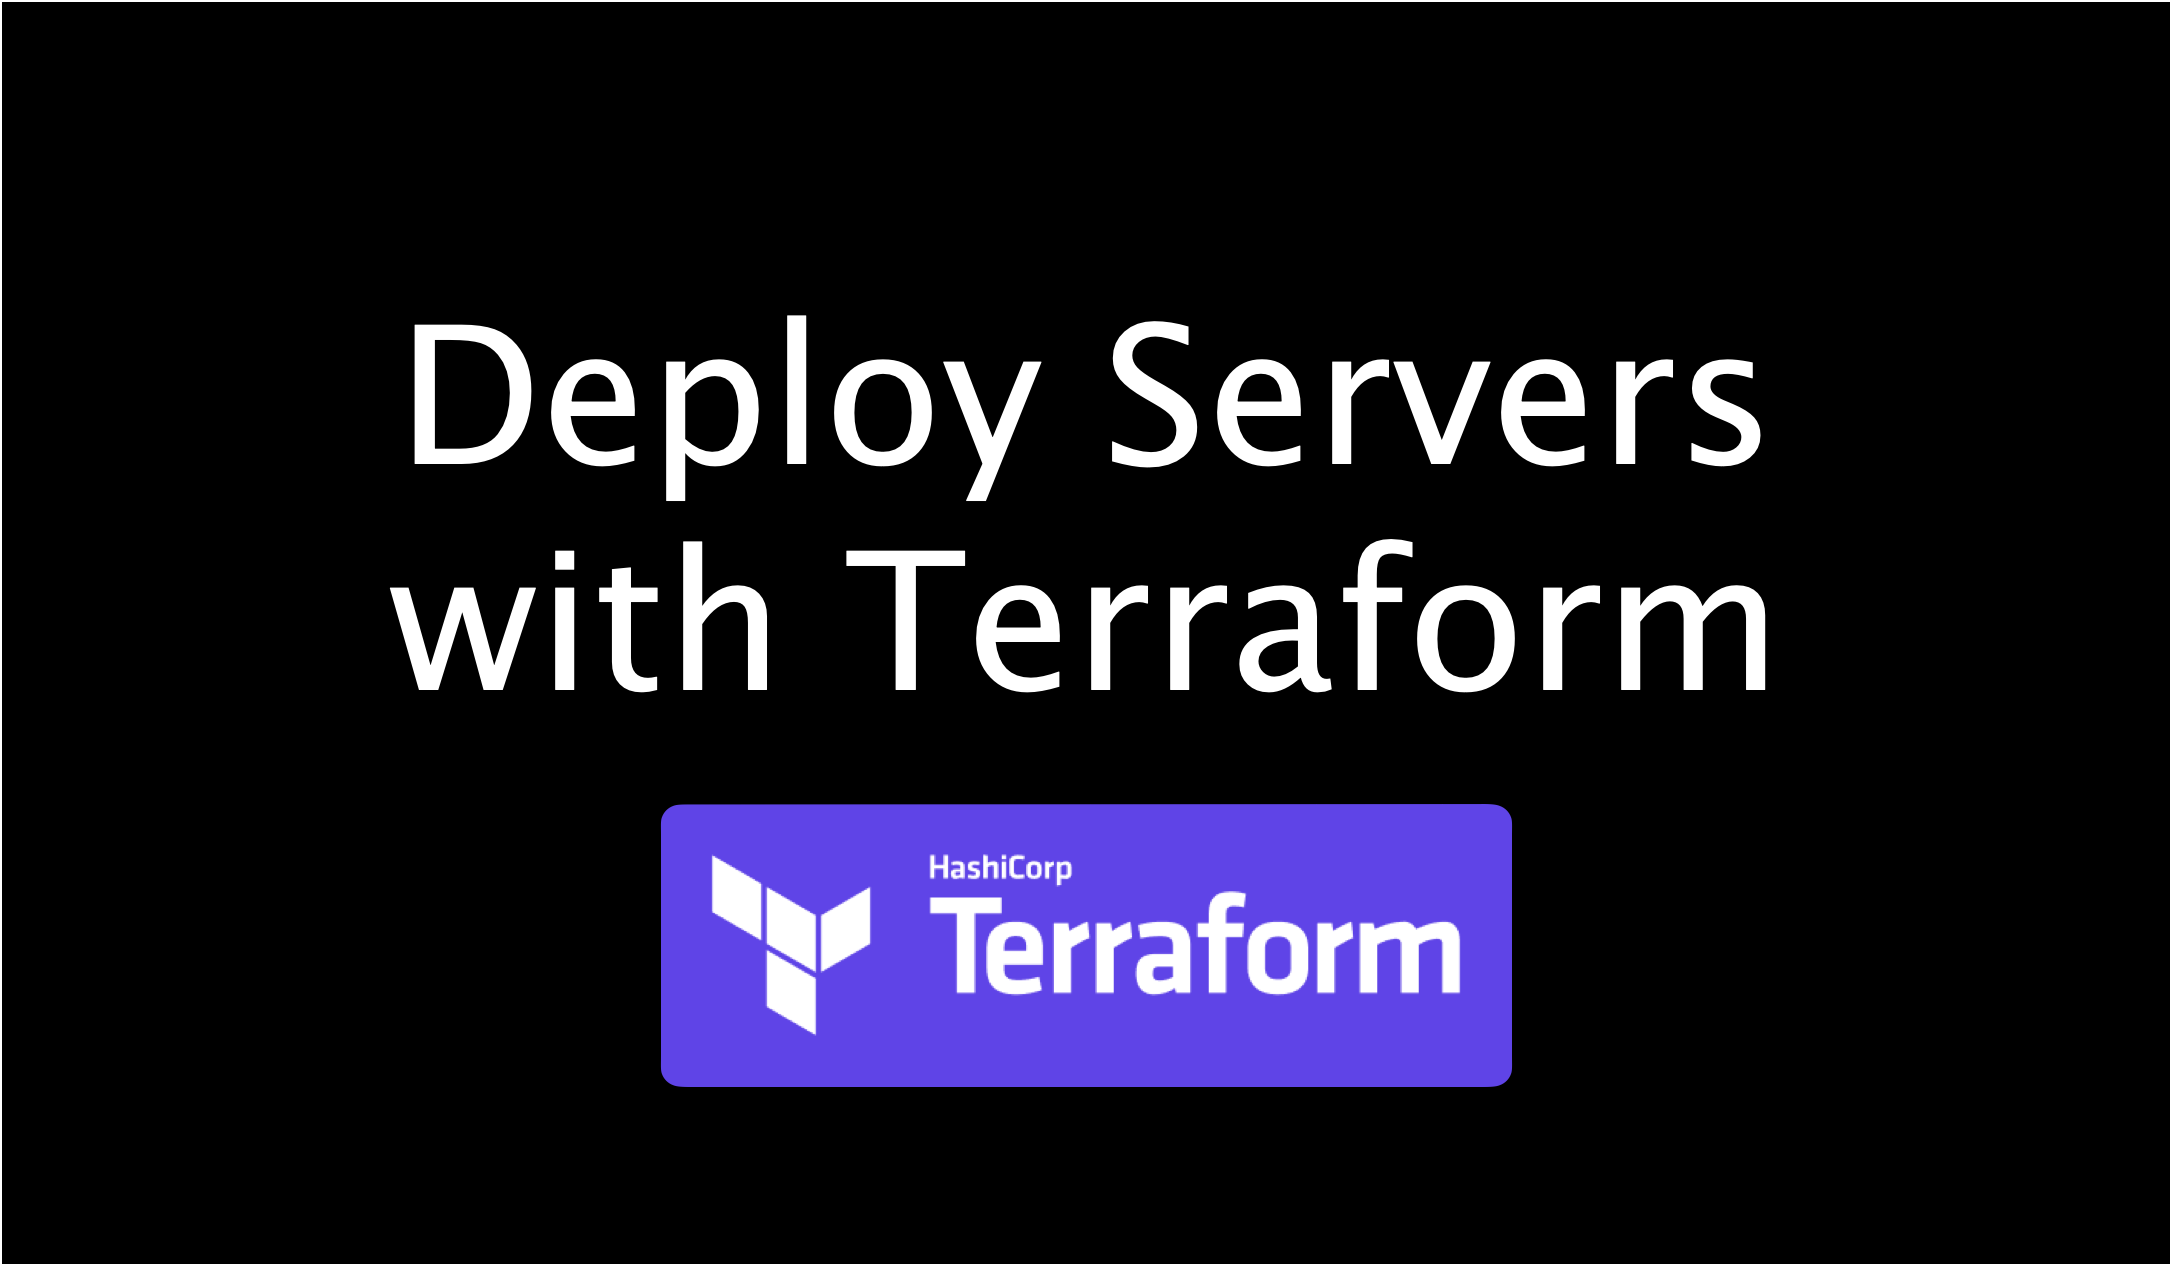 Deploy Servers with Terraform